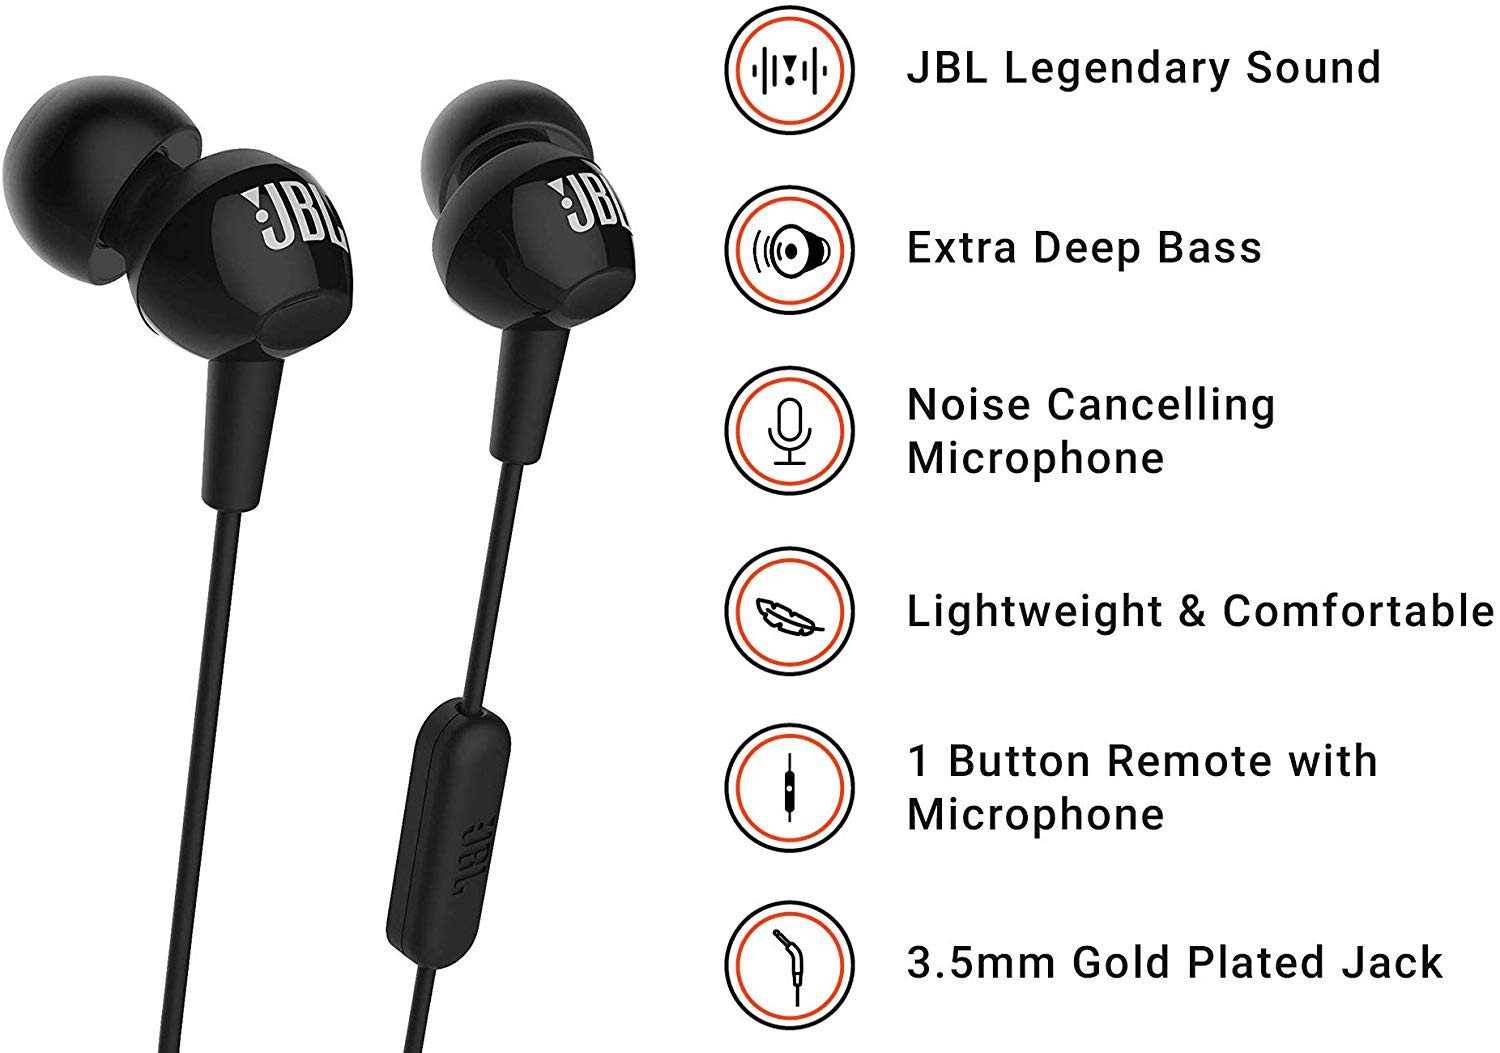 Jbl deep bass купить. Гарнитура JBL c100si. JBL c100si in-Ear Headphones. Наушники-вкладыши JBL c100si Black. JBL c100si Black jblc100siublk.